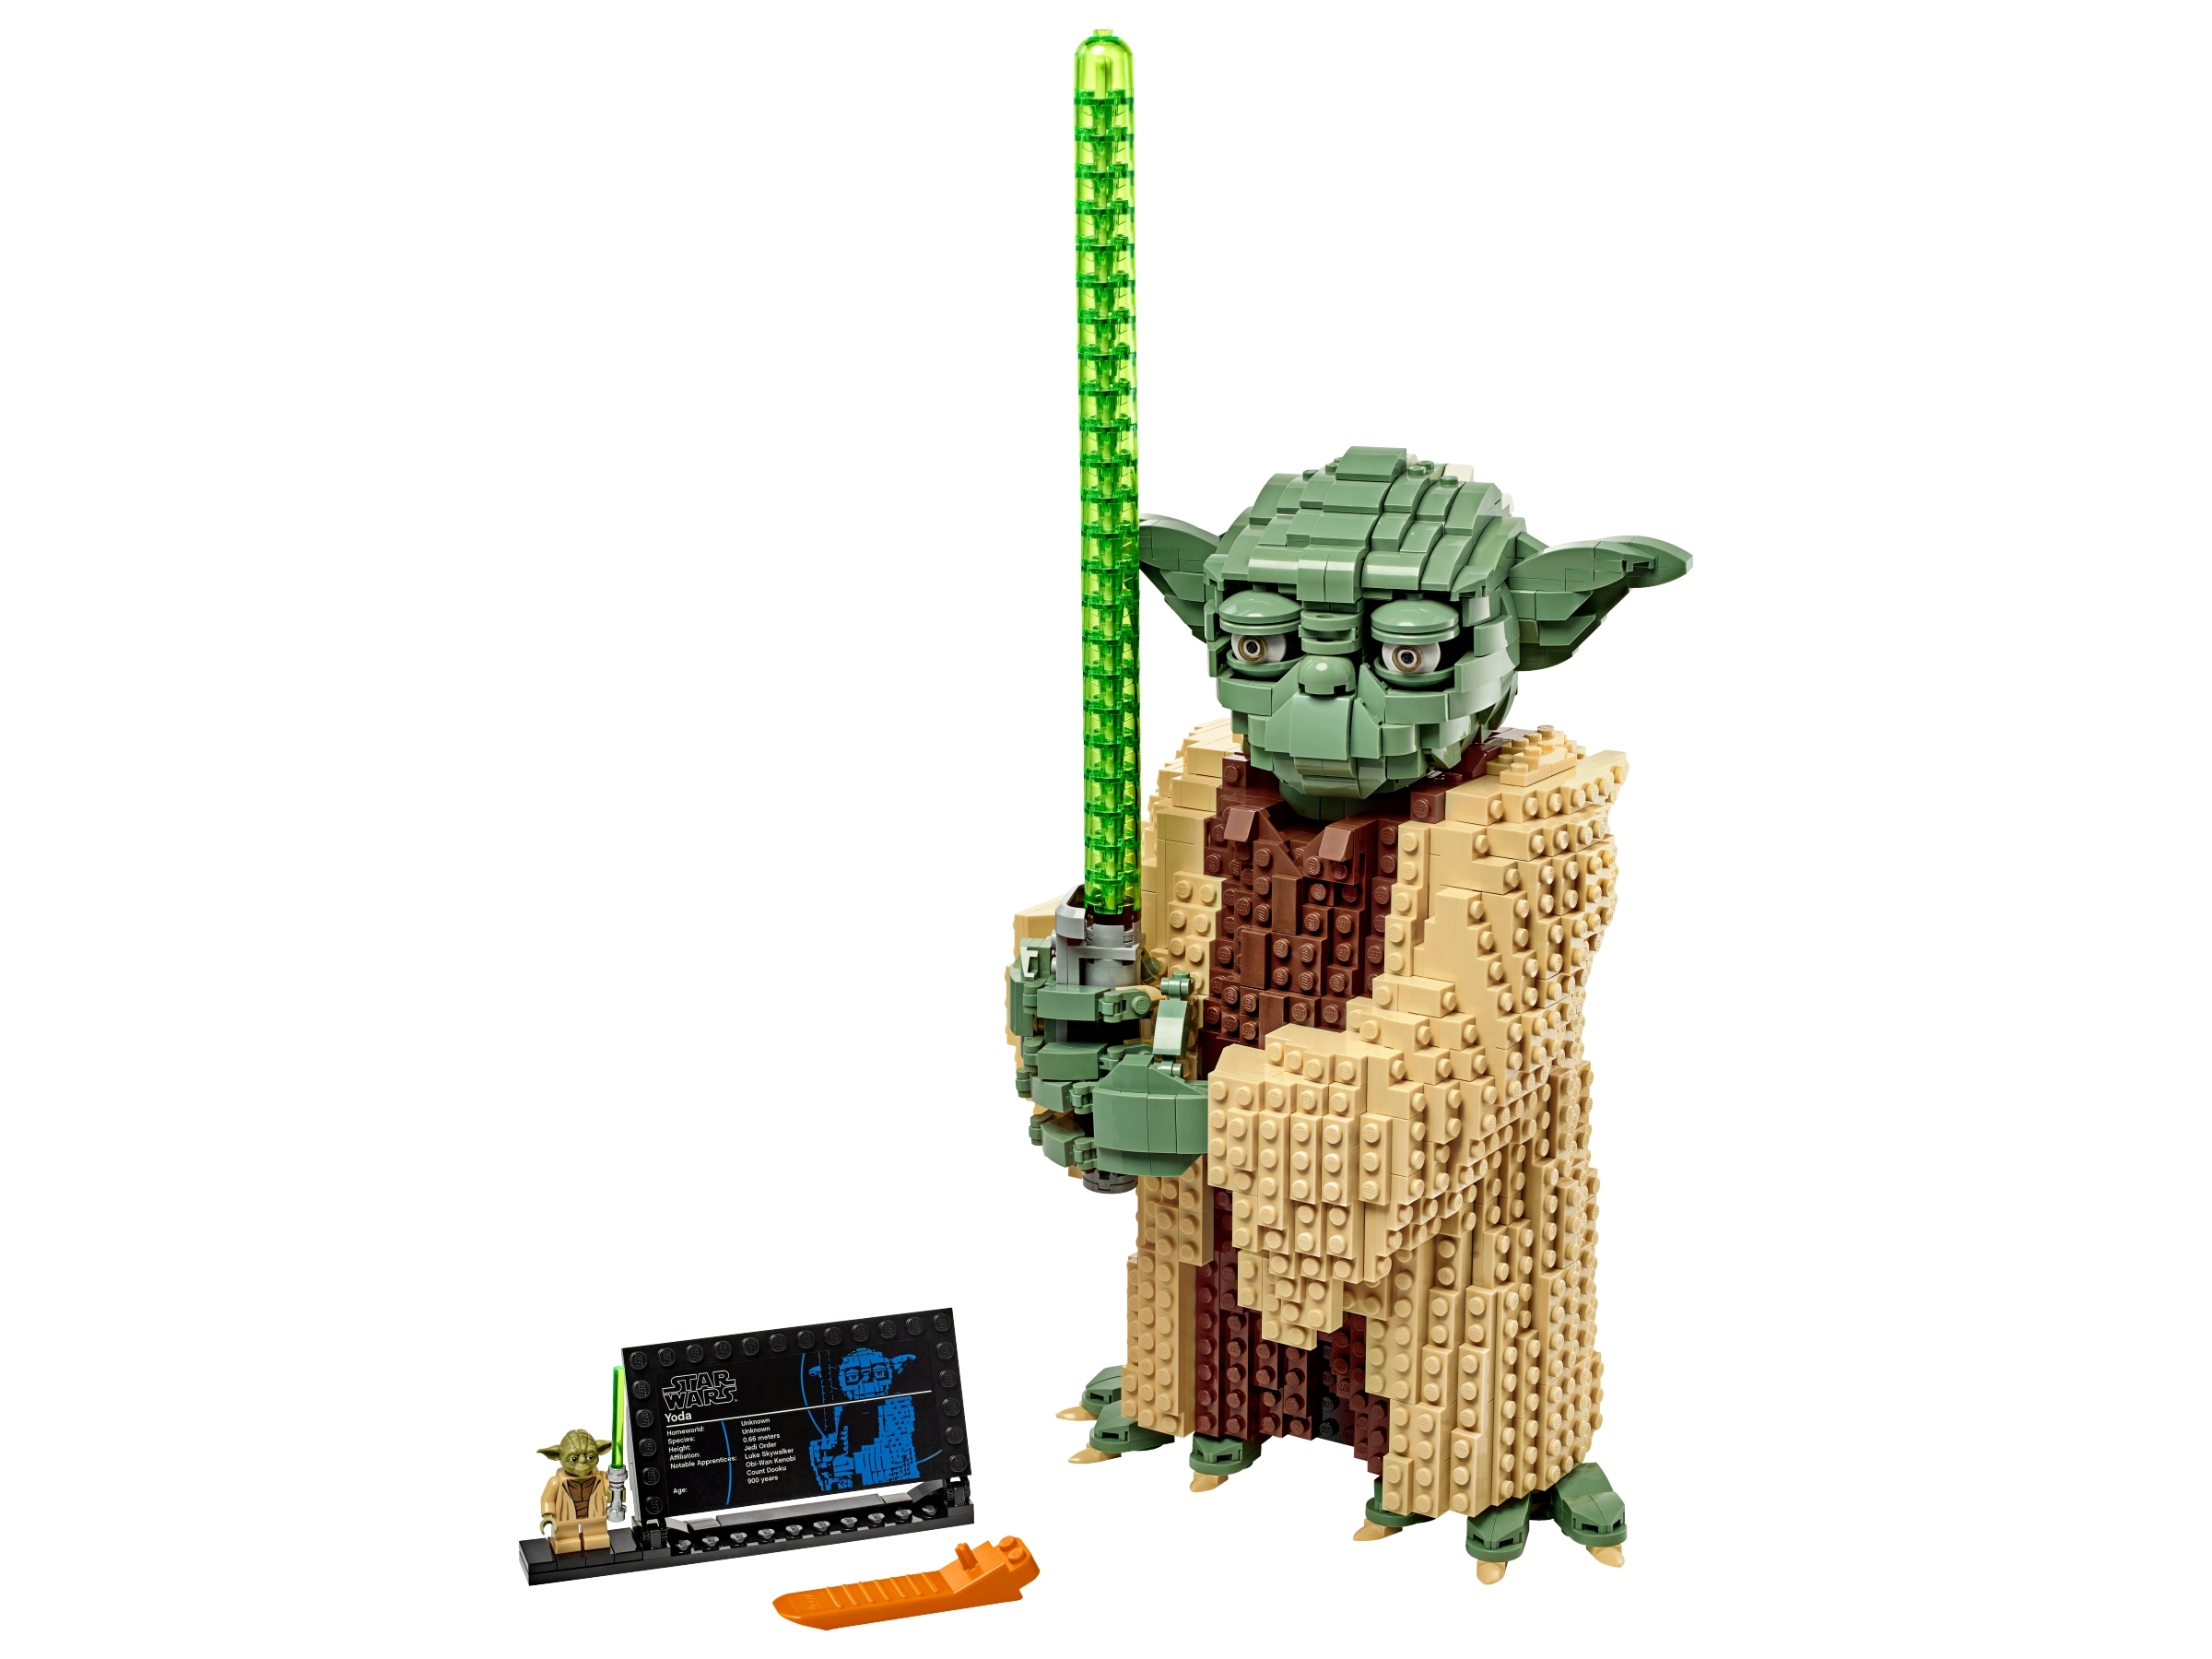 new lego yoda set